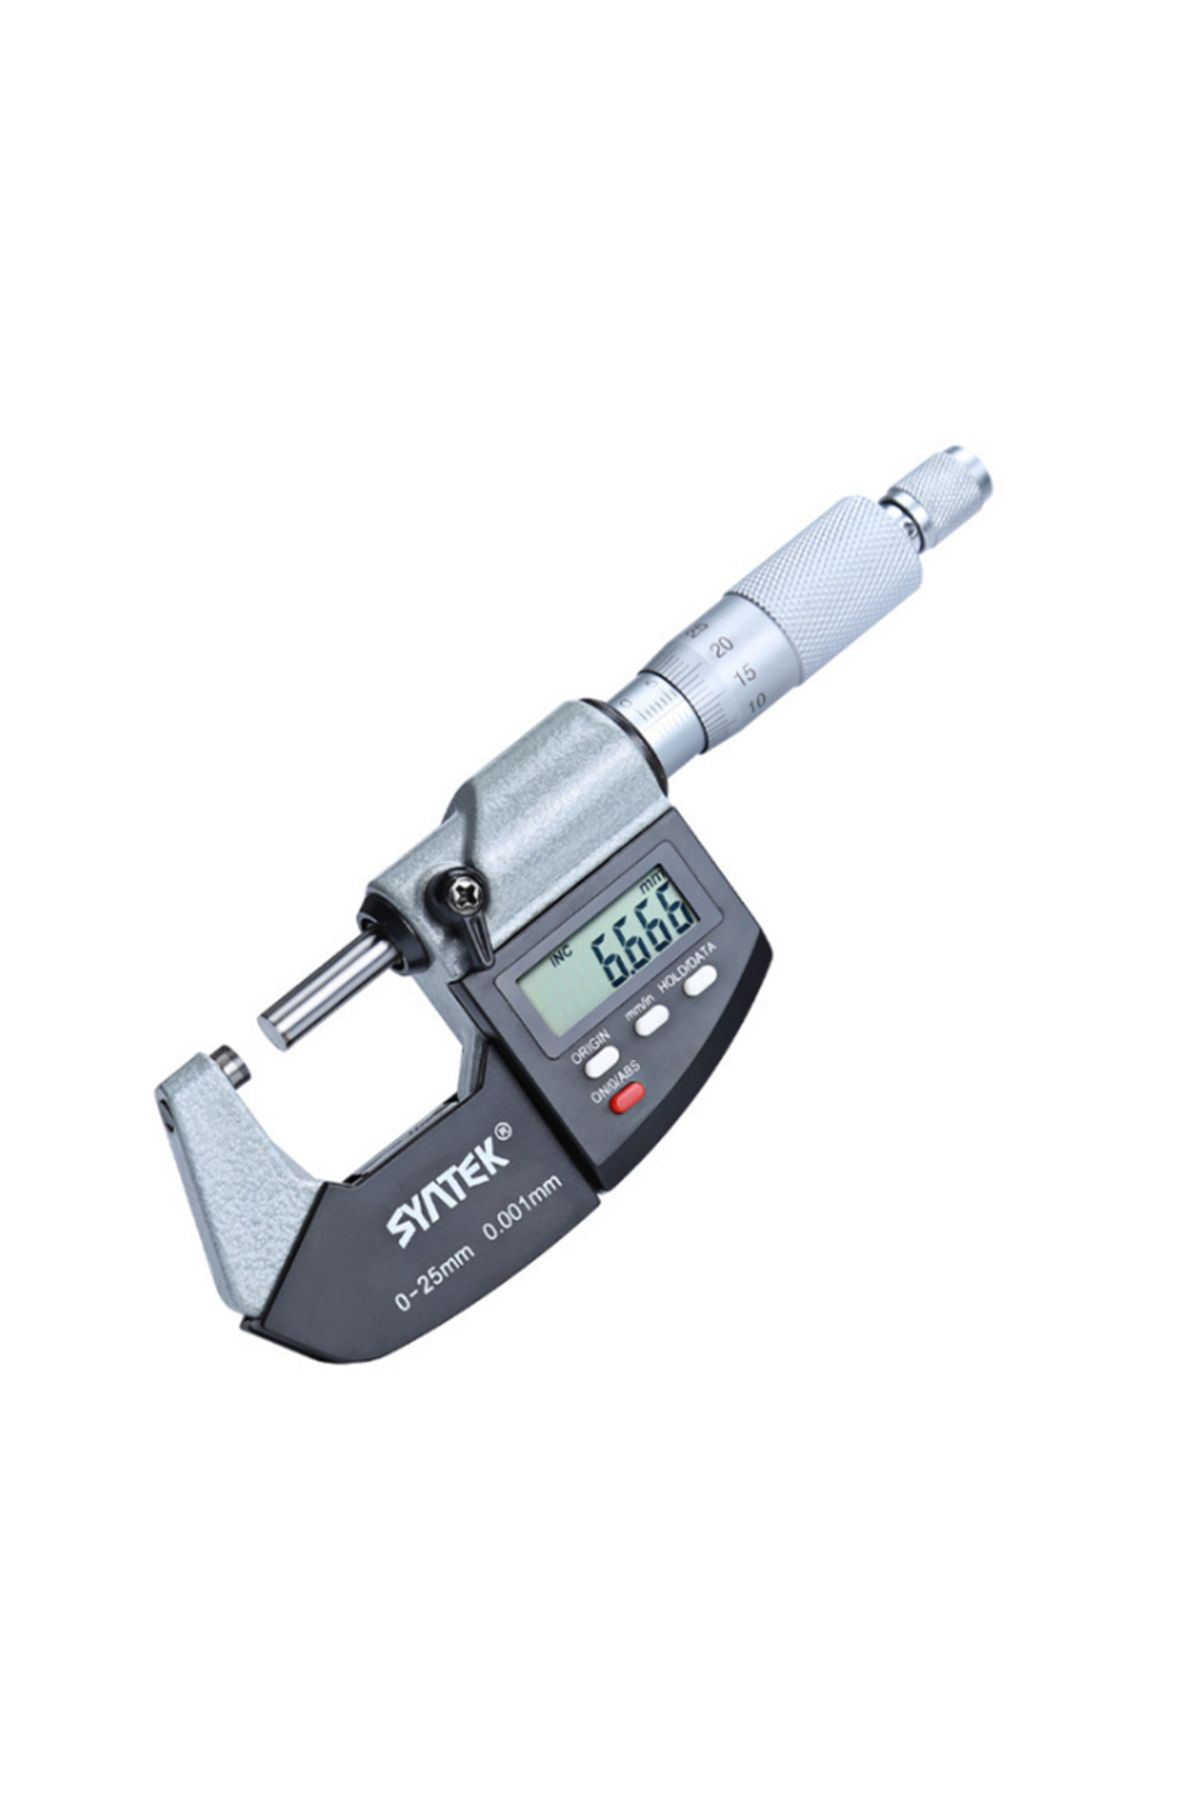 Syntek Dijital Mikrometre 0-25mm 0.001mm